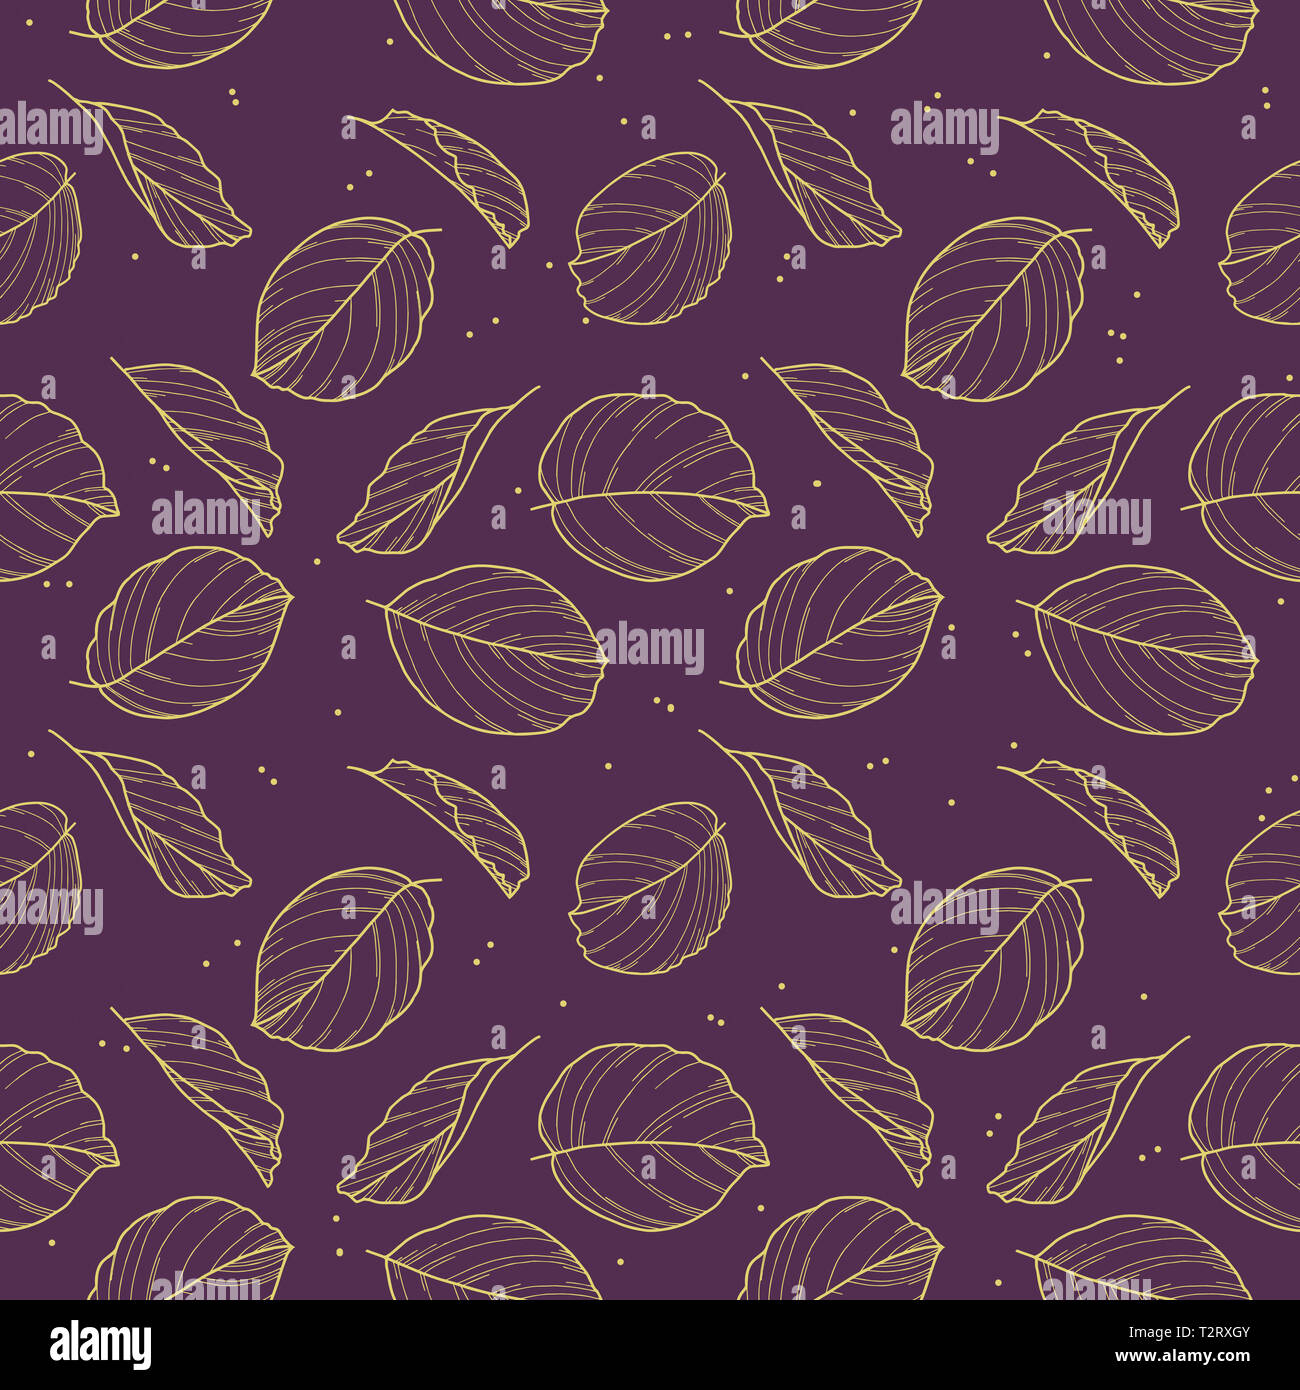 Elegant seamless pattern with drawn Calathea Prayer Plant leaf outlines in golden color on dark violet background Stock Photo